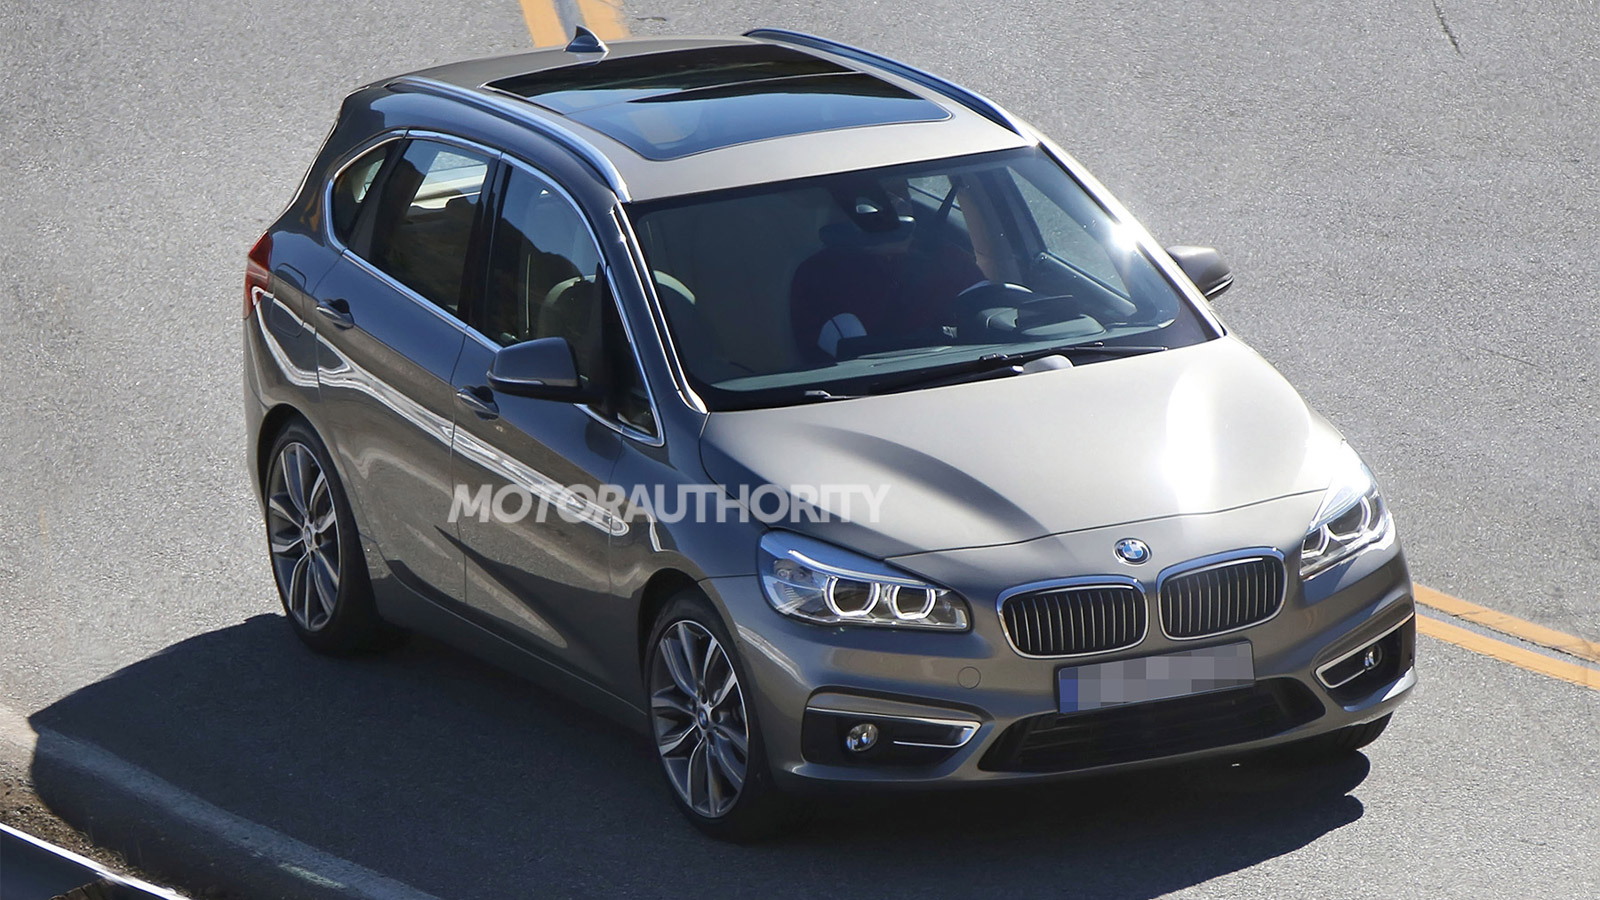 2014 BMW 2-Series Active Tourer spy shots